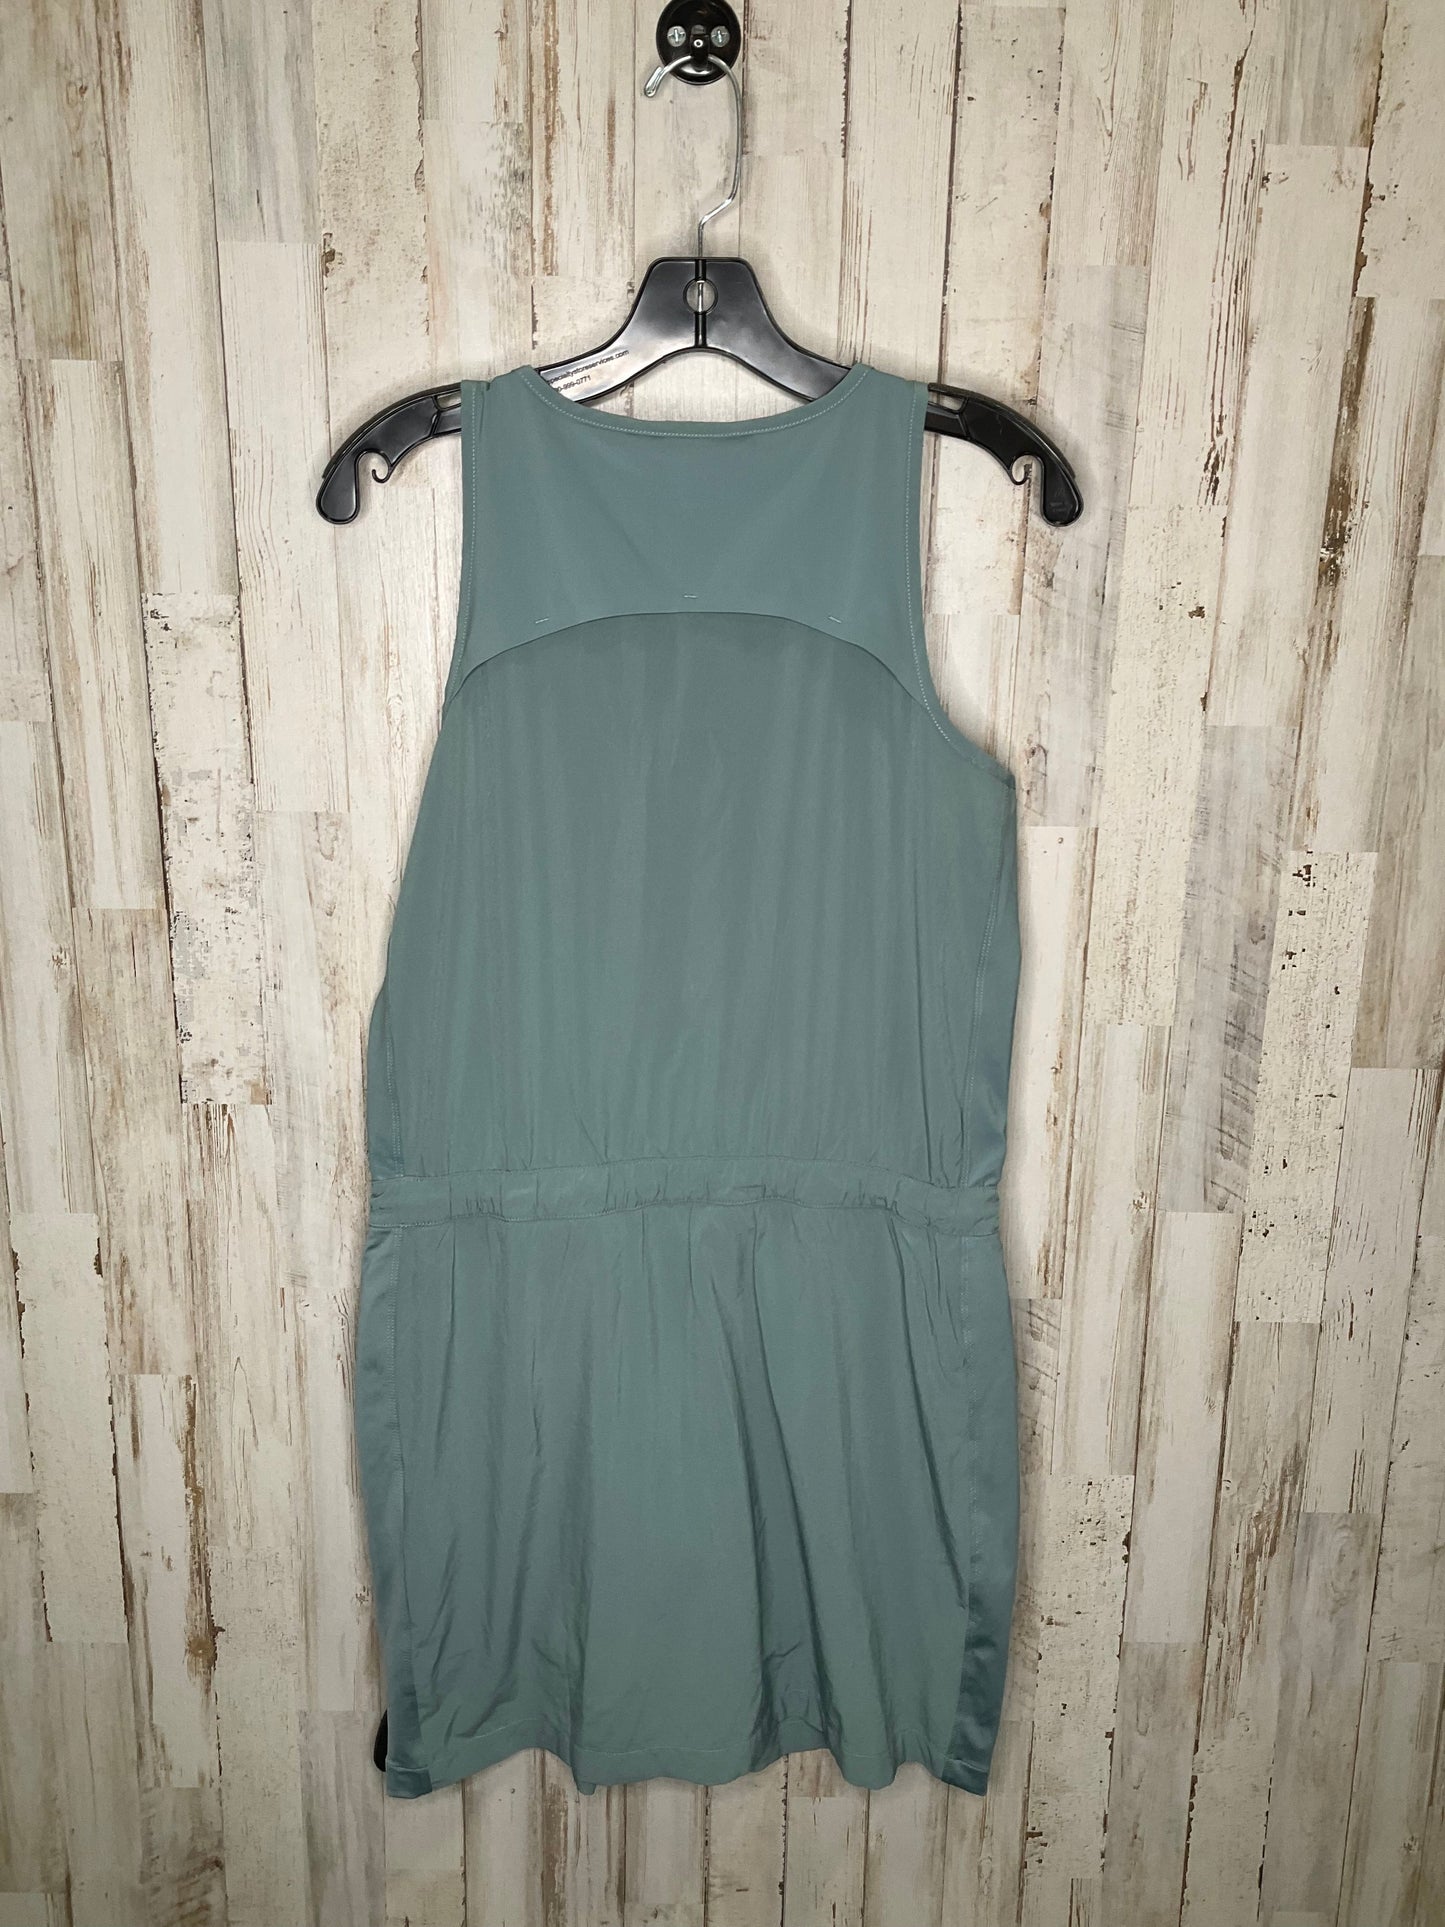 Green Athletic Dress Athleta, Size 8